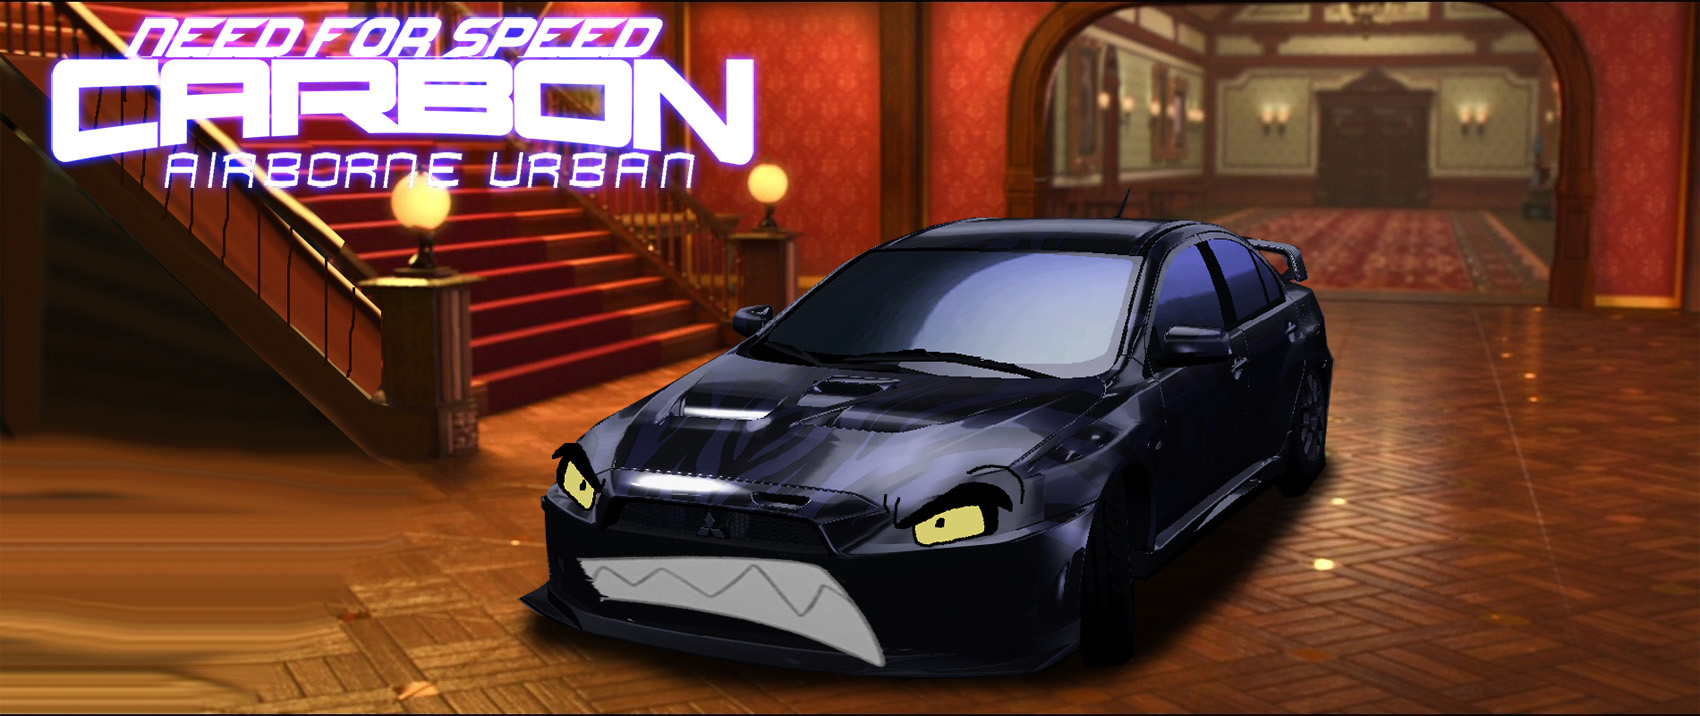 Need for Speed Carbon Airborne Urban Phantom Mitsubishi by Rainbow-Dash-Rockz